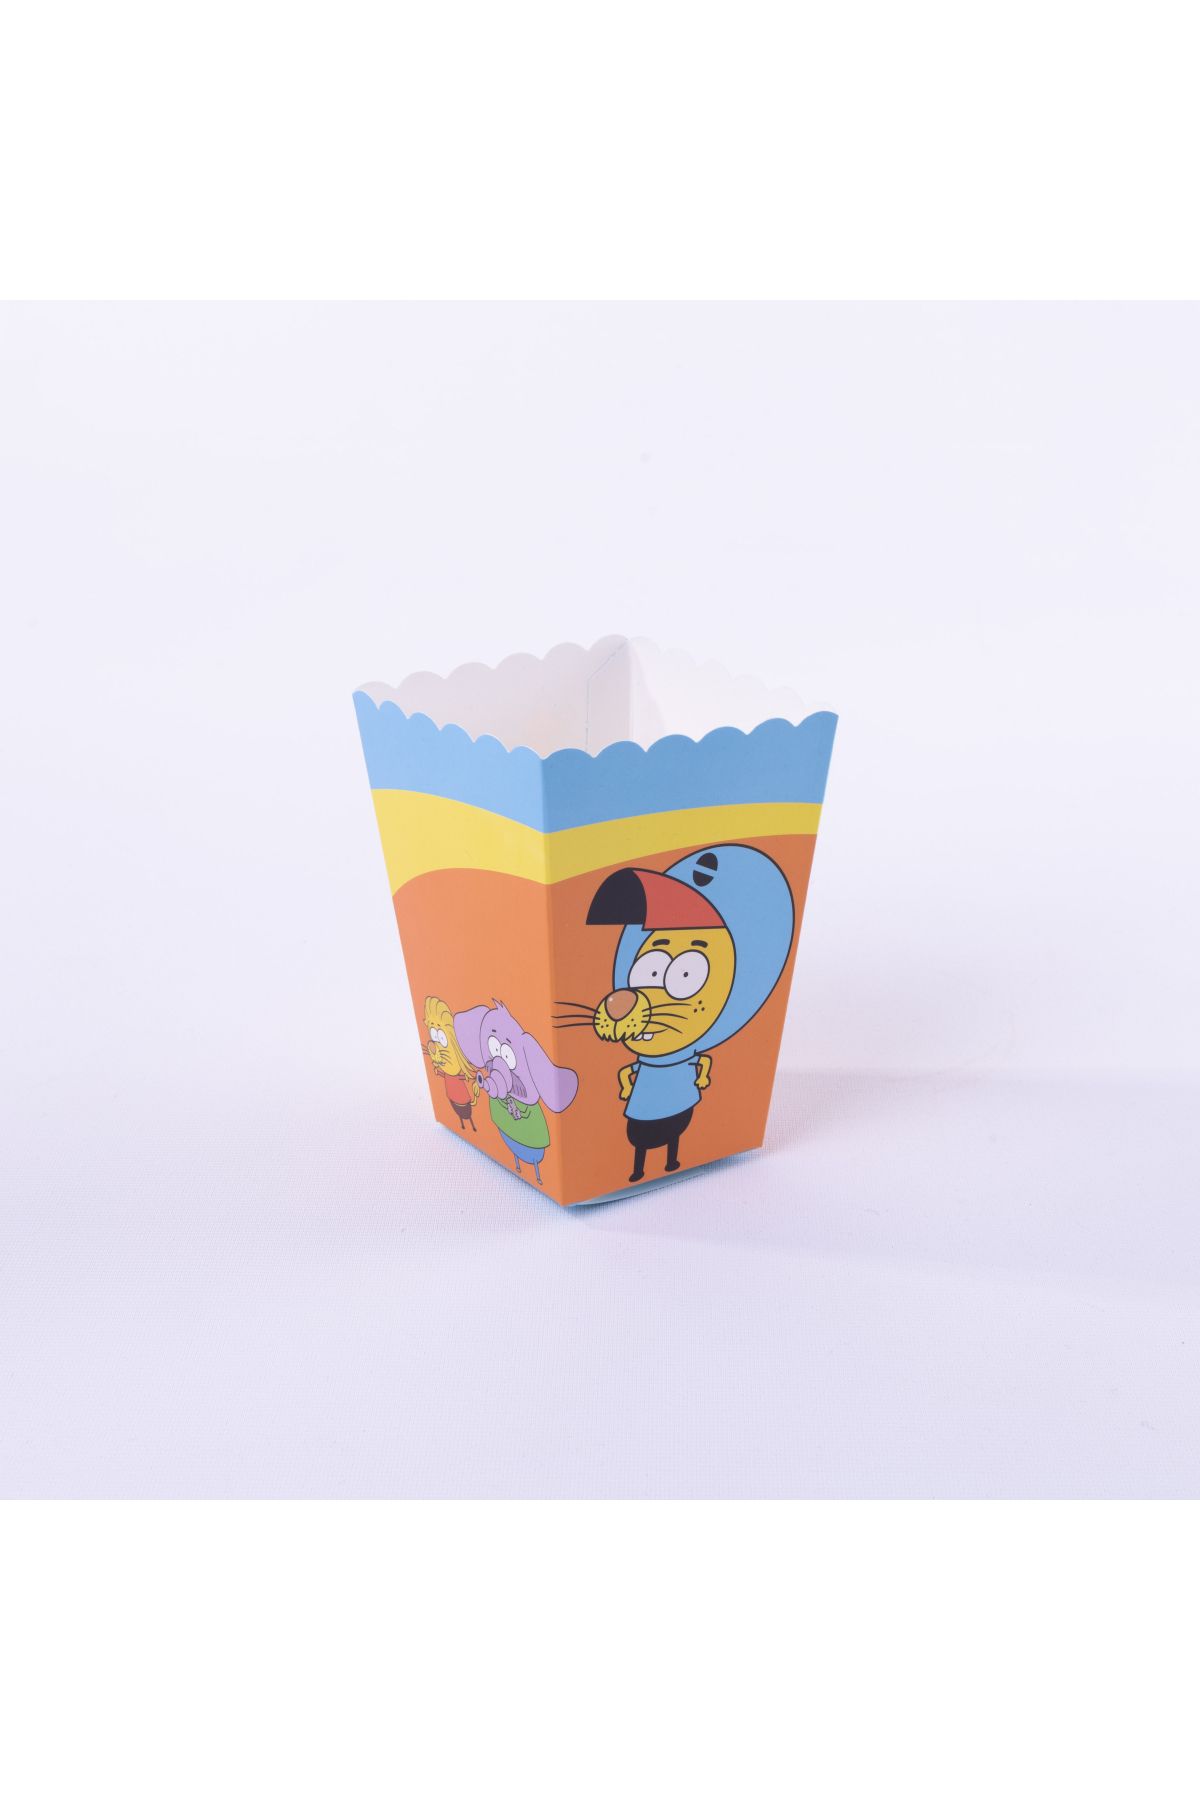 Bimotif Turuncu Kral Şakir temalı popcorn kutusu 4 adet